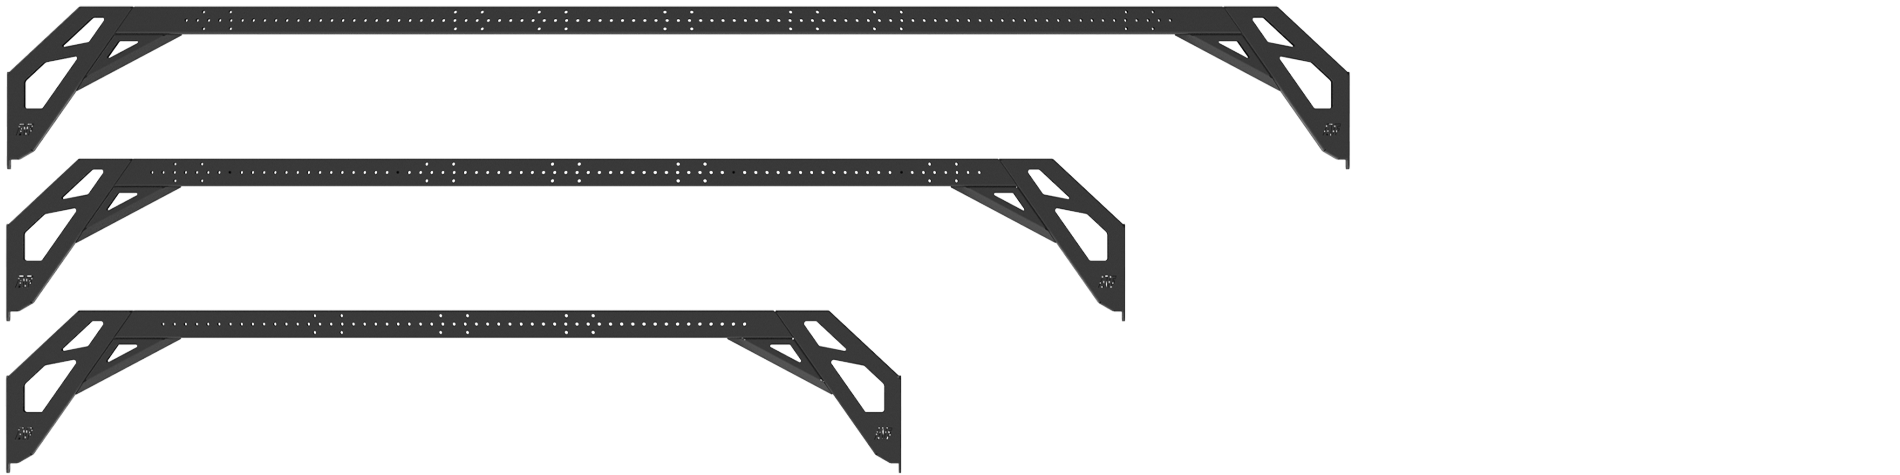 AlphaFit Form Rig bridge lengths